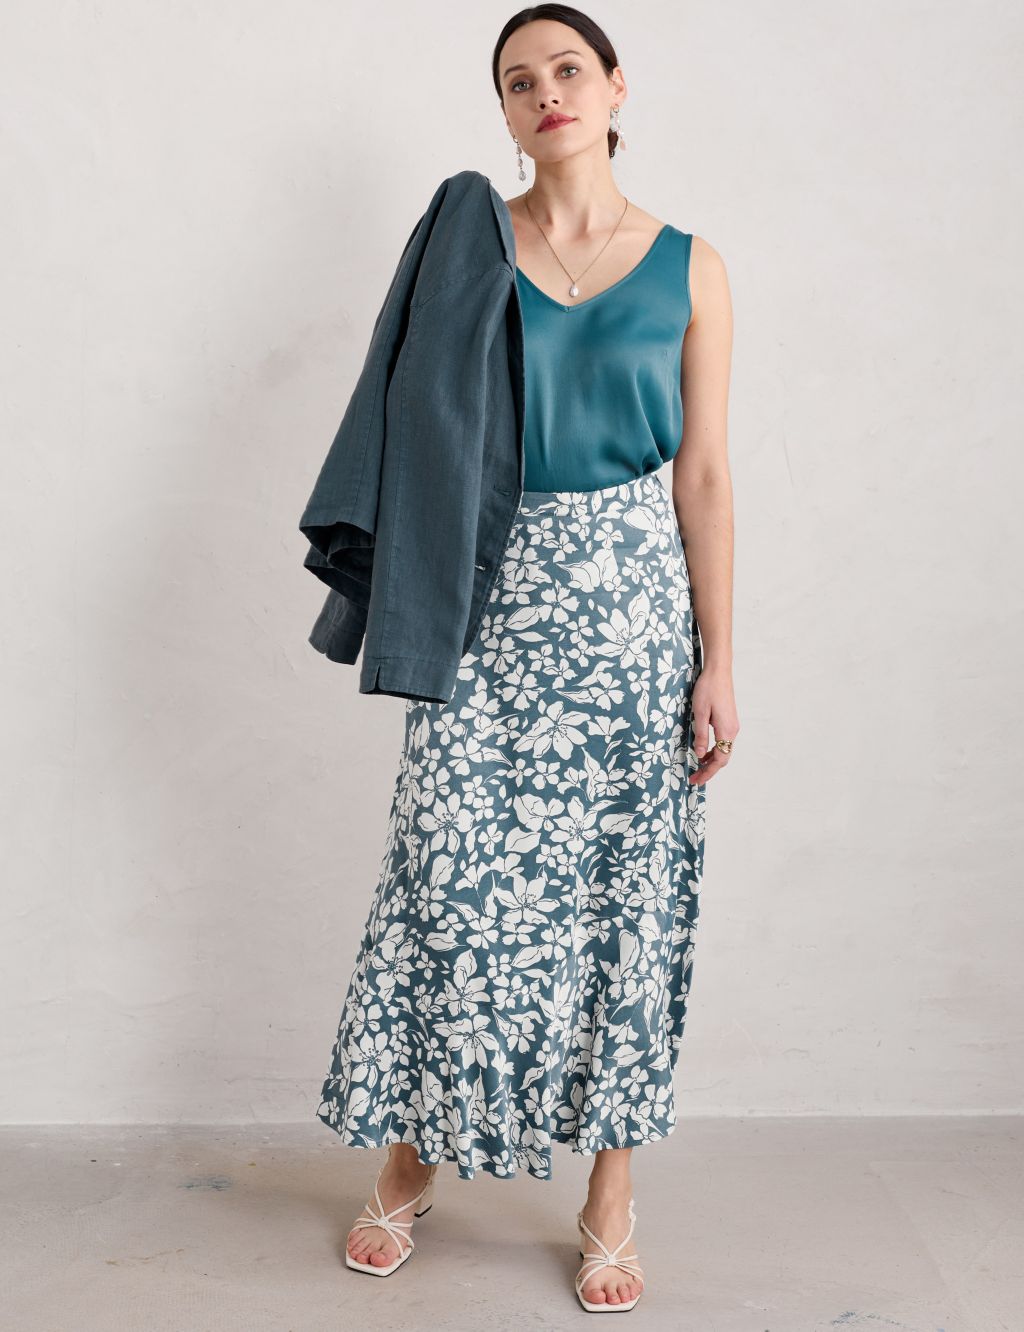 Floral Midaxi A-Line Skirt